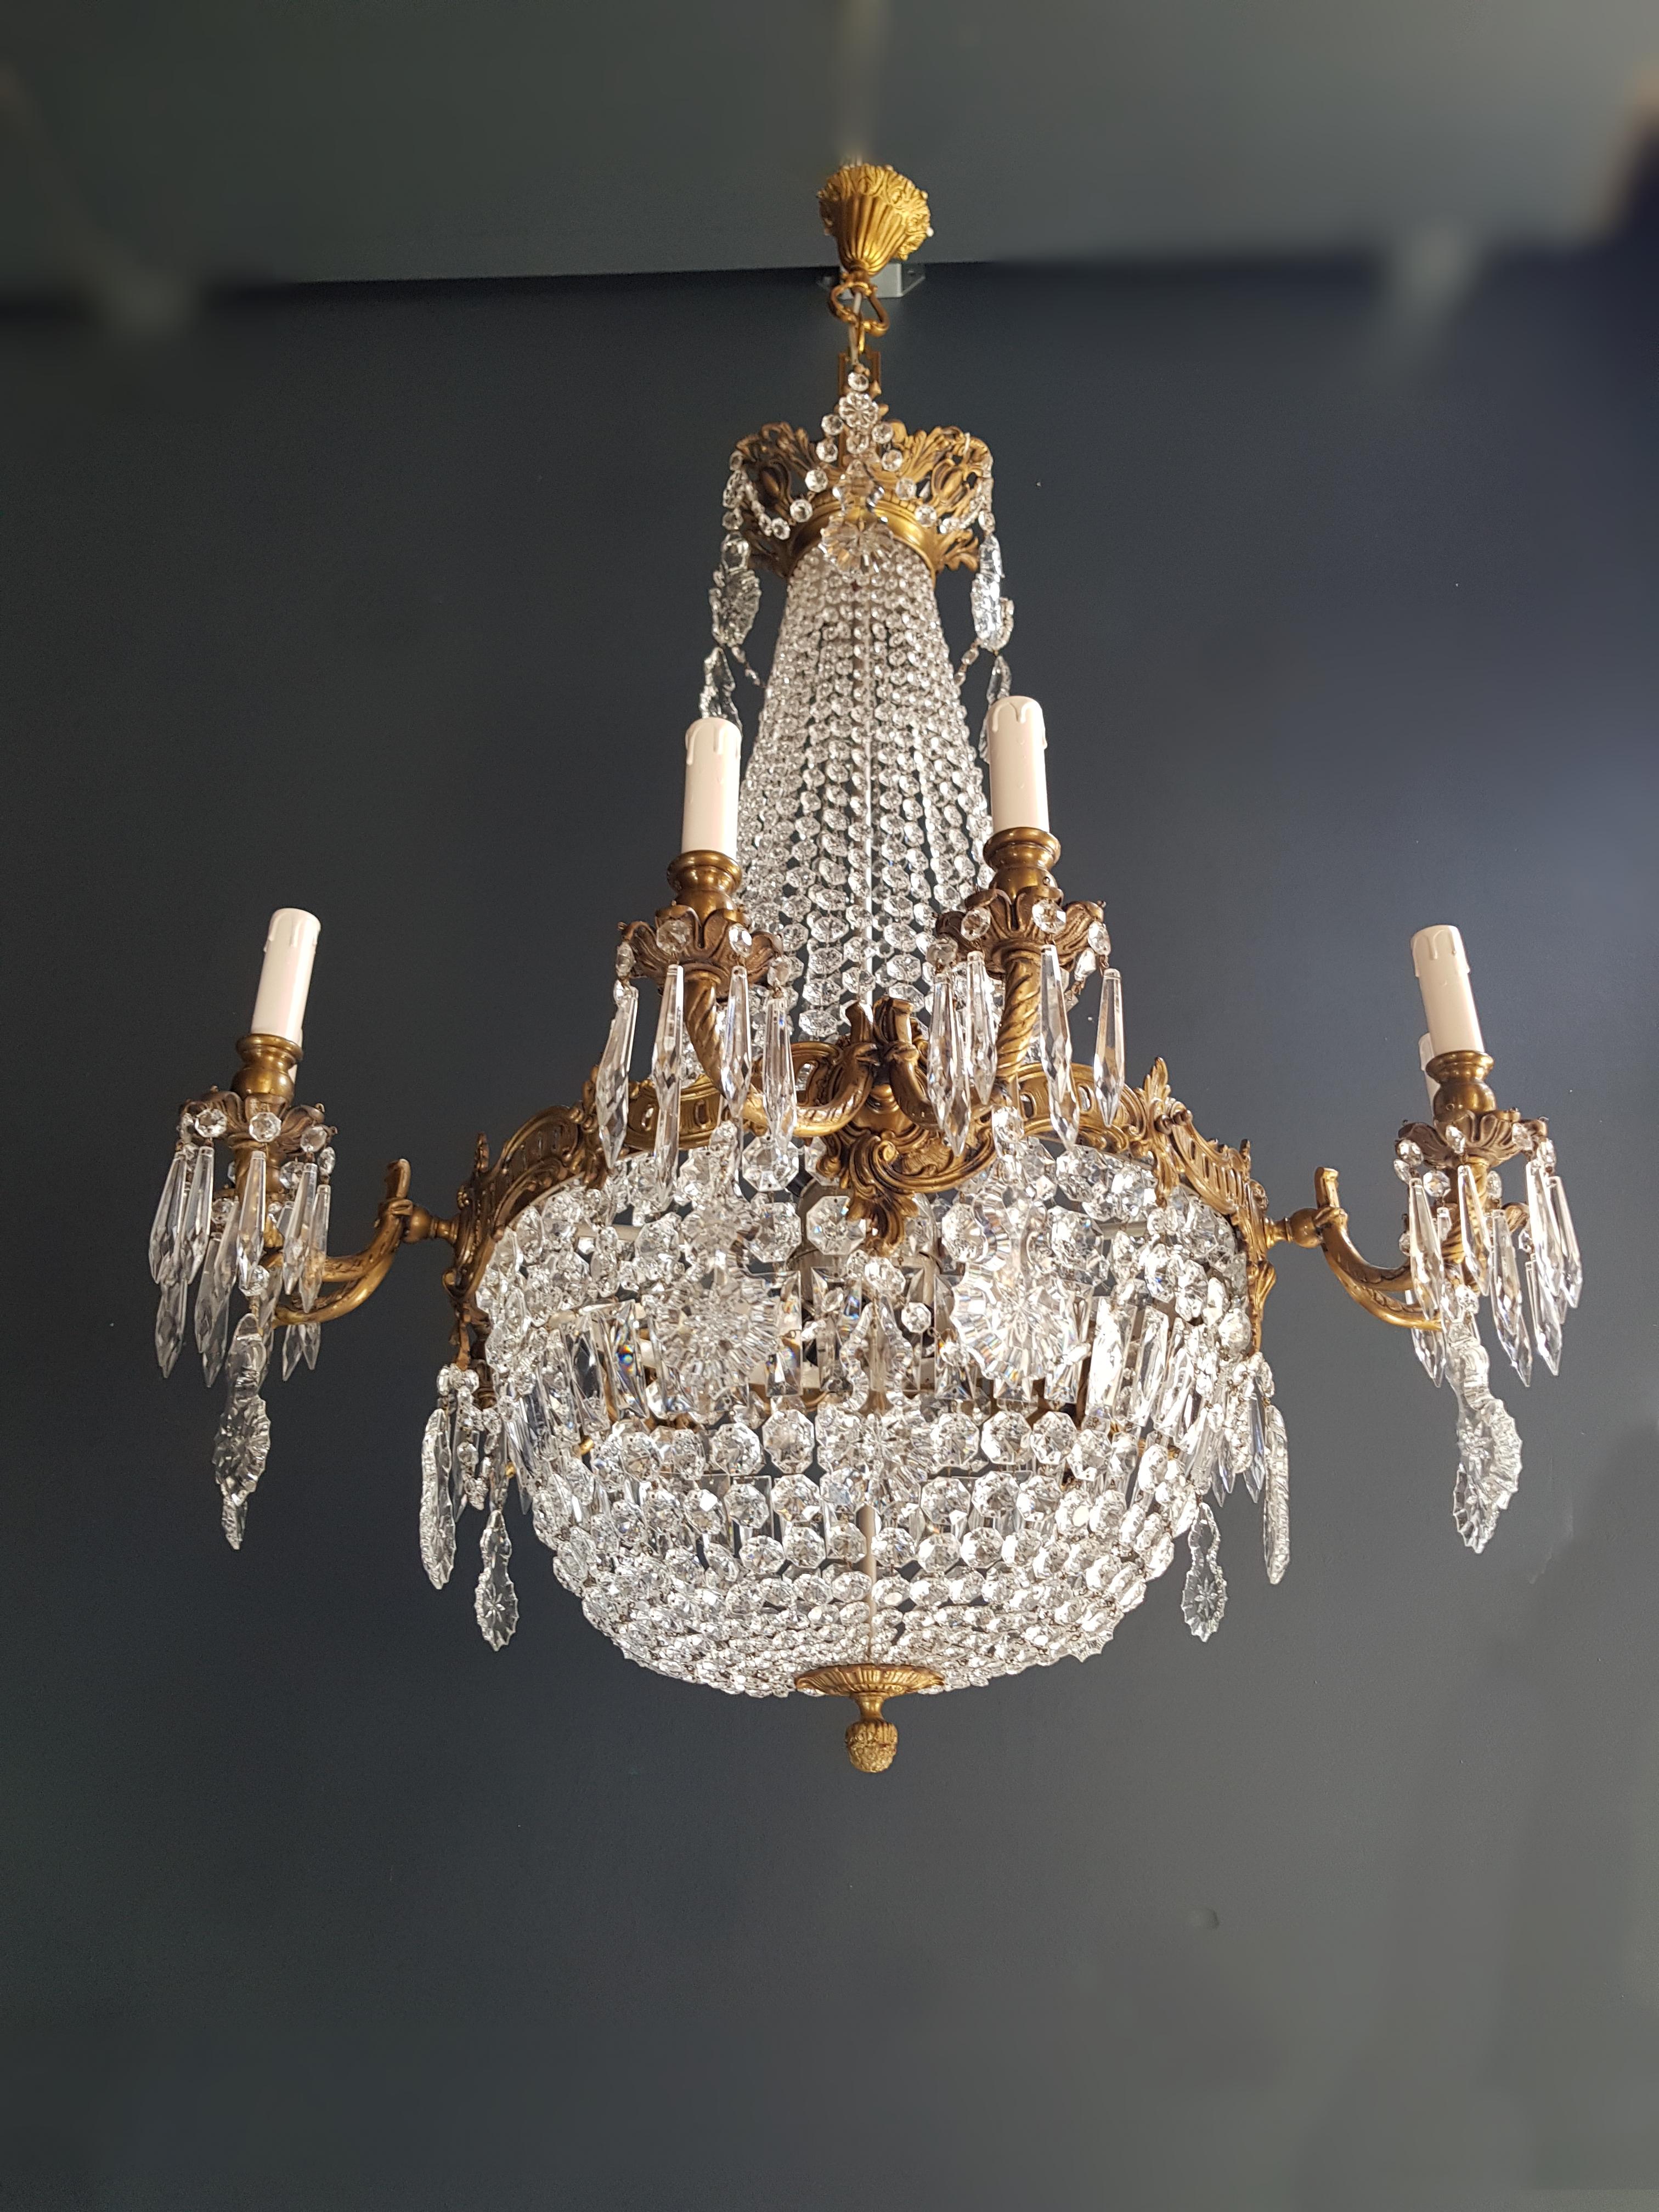 Montgolfiè Empire Sac a Pearl Chandelier Crystal Lustre Ceiling Lamp Antique 3